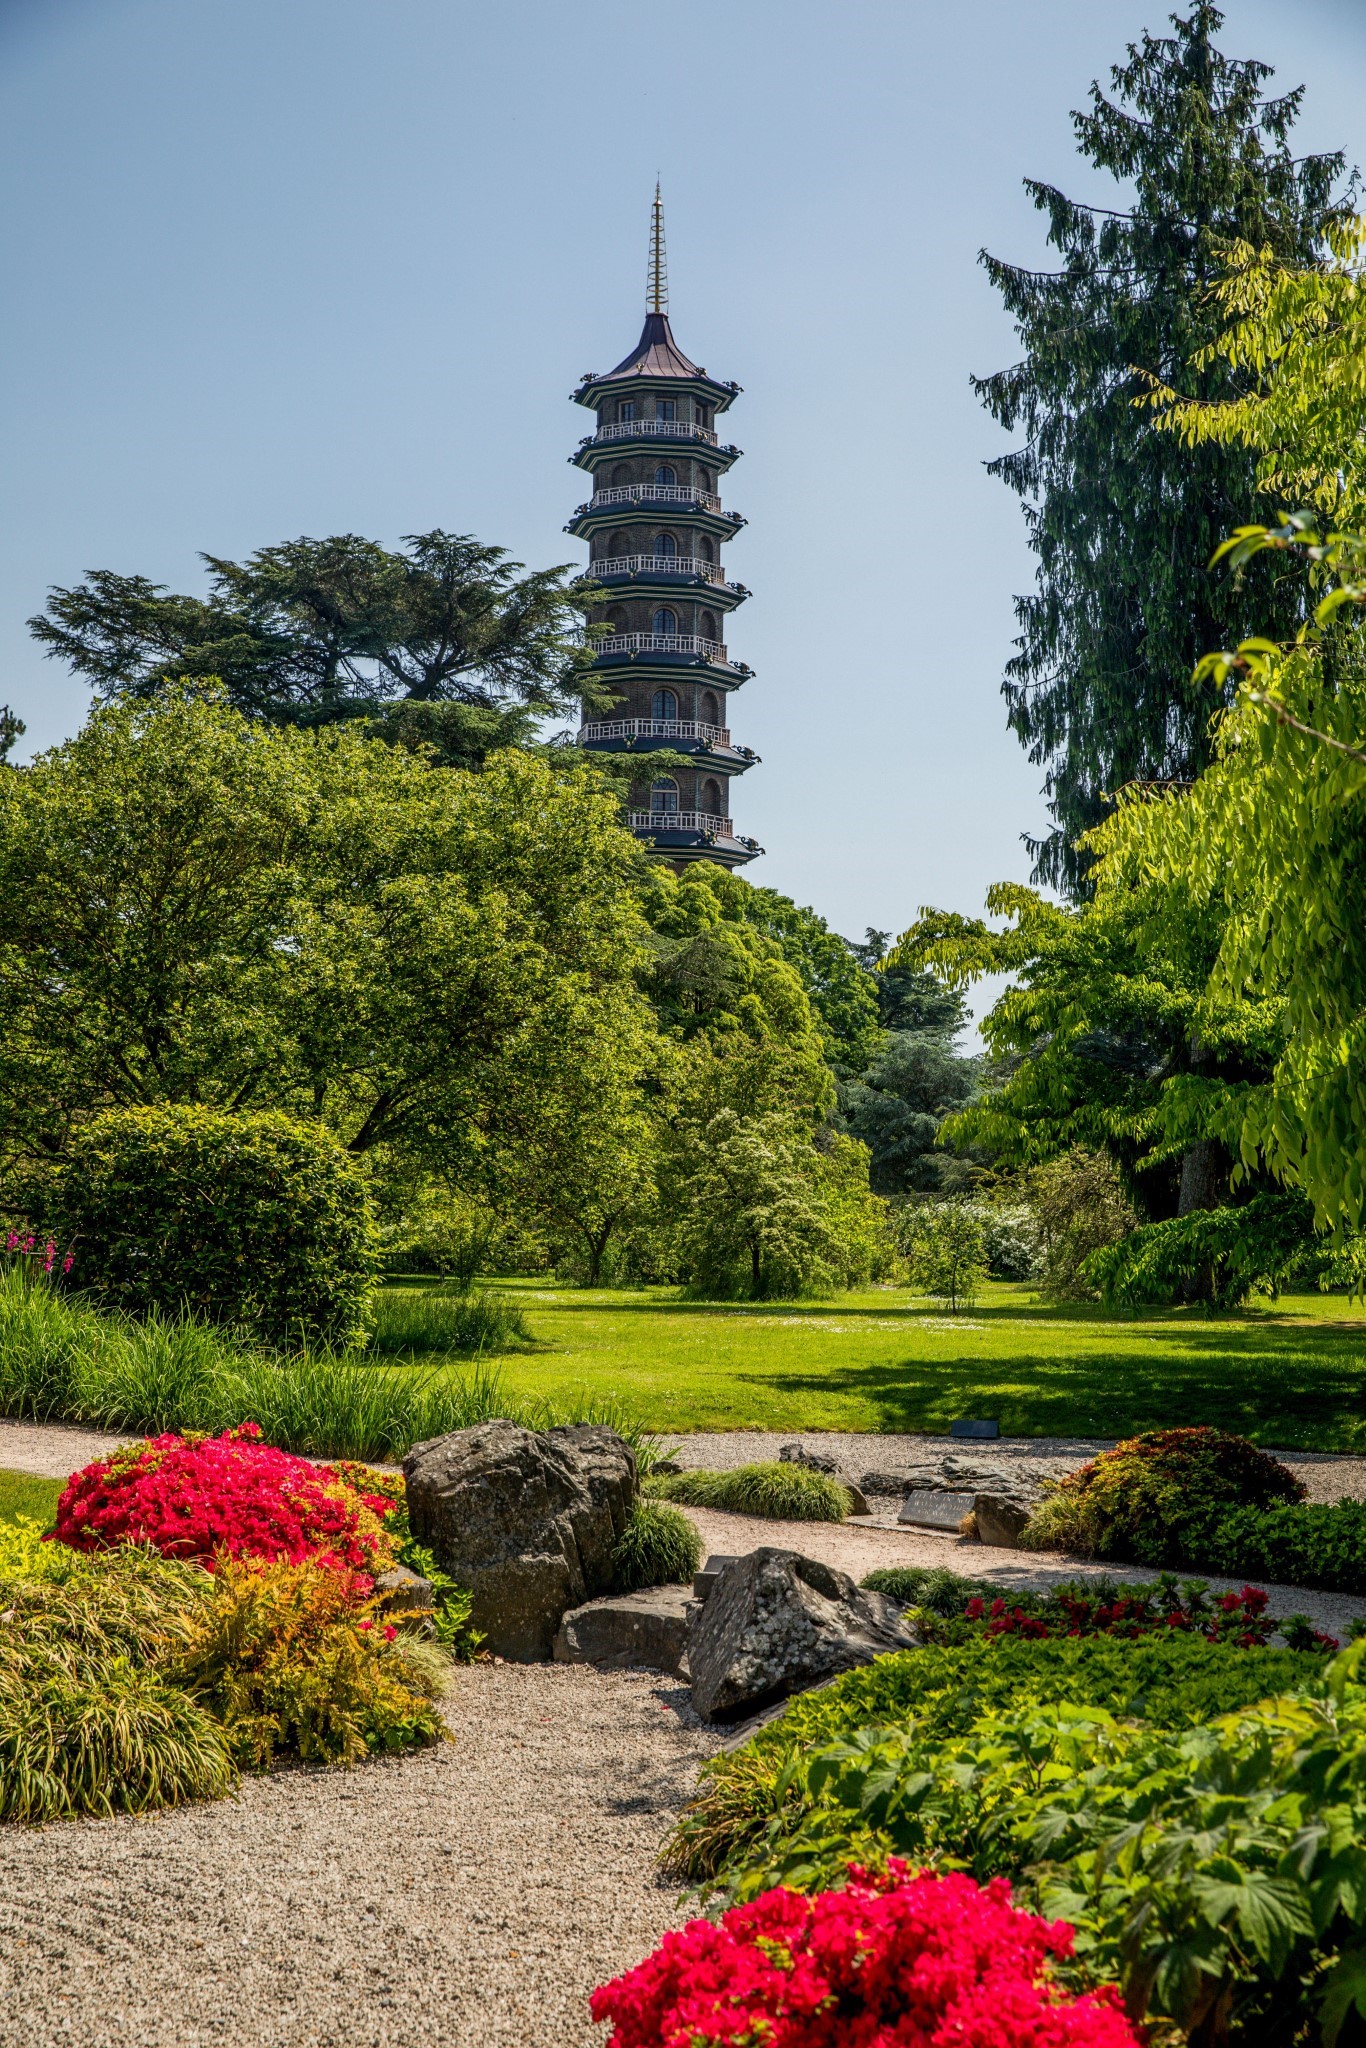 Chinesische Pagode - Danielas Blog #18 – The Royal Botanic Gardens Kew